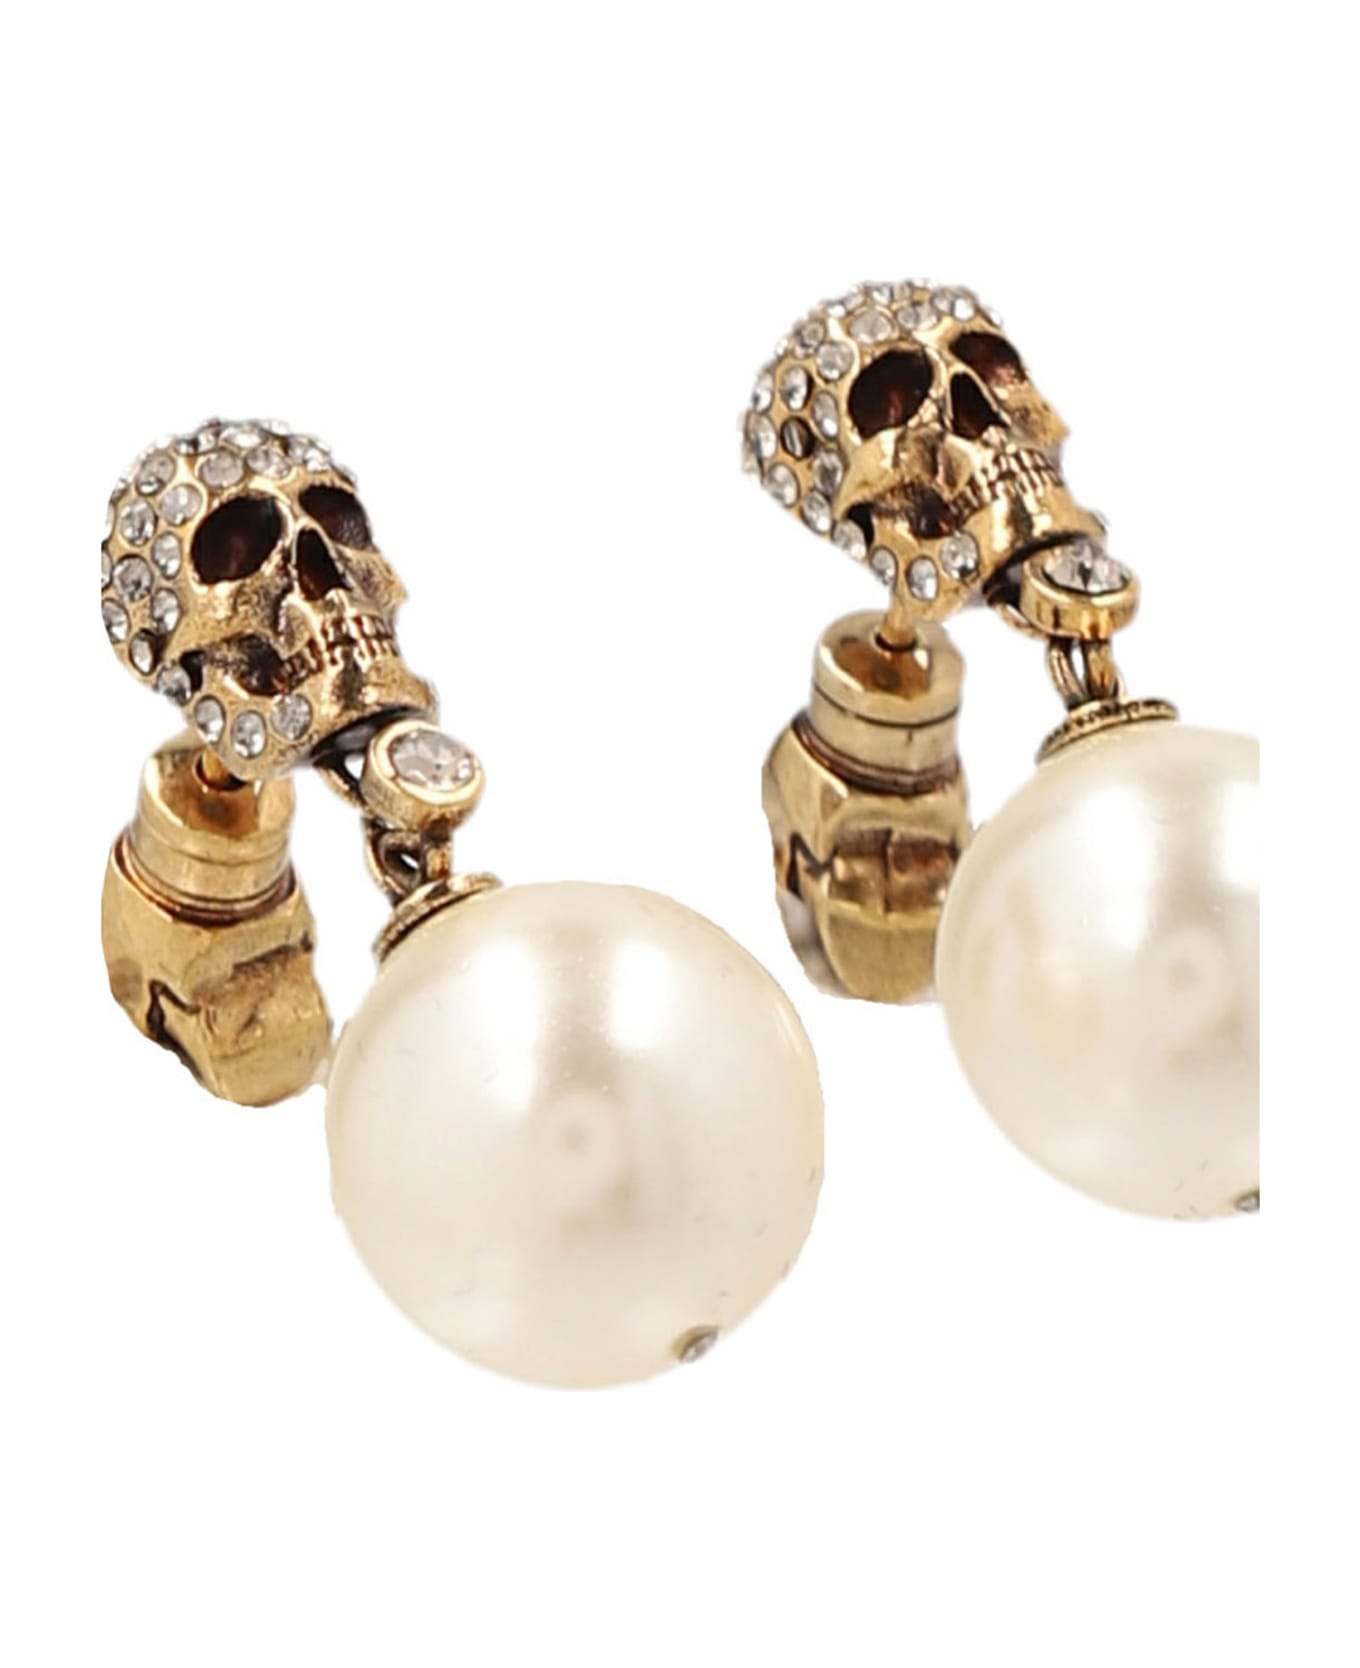 Alexander McQueen Pearl Skull Earrings In Antiqued Gold - Gold イヤリング